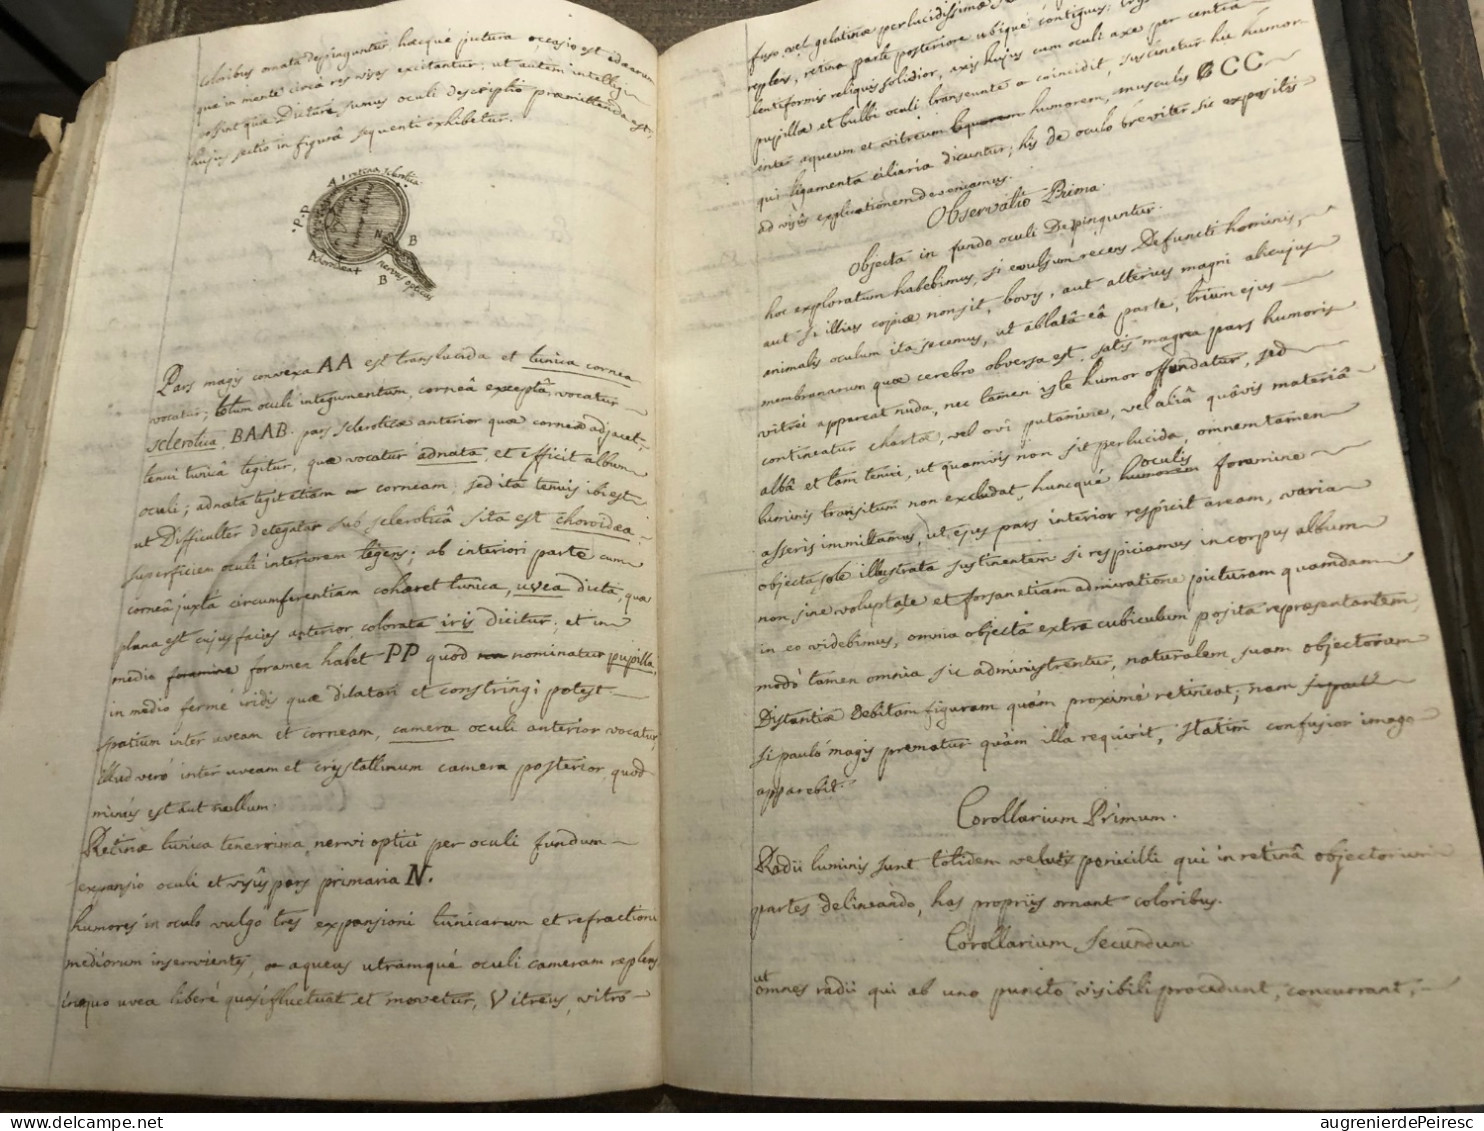 Manuscrit de physique en latin  XVIIIeme , XIXeme siècle ?